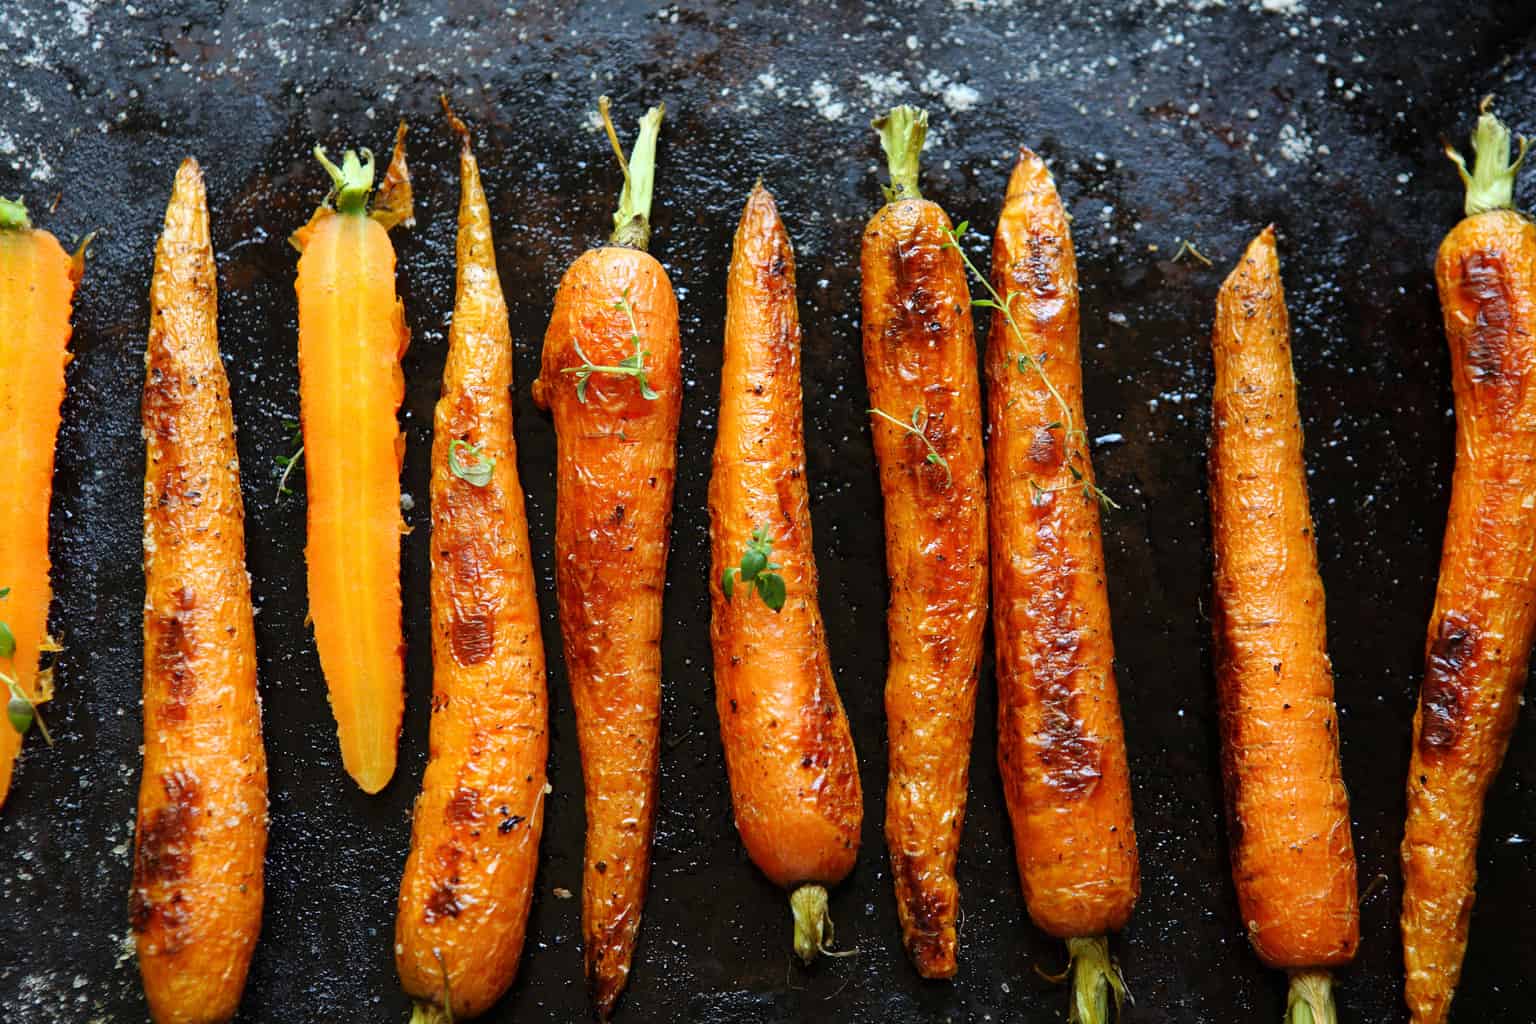 Roasted carrots on a baking sheet